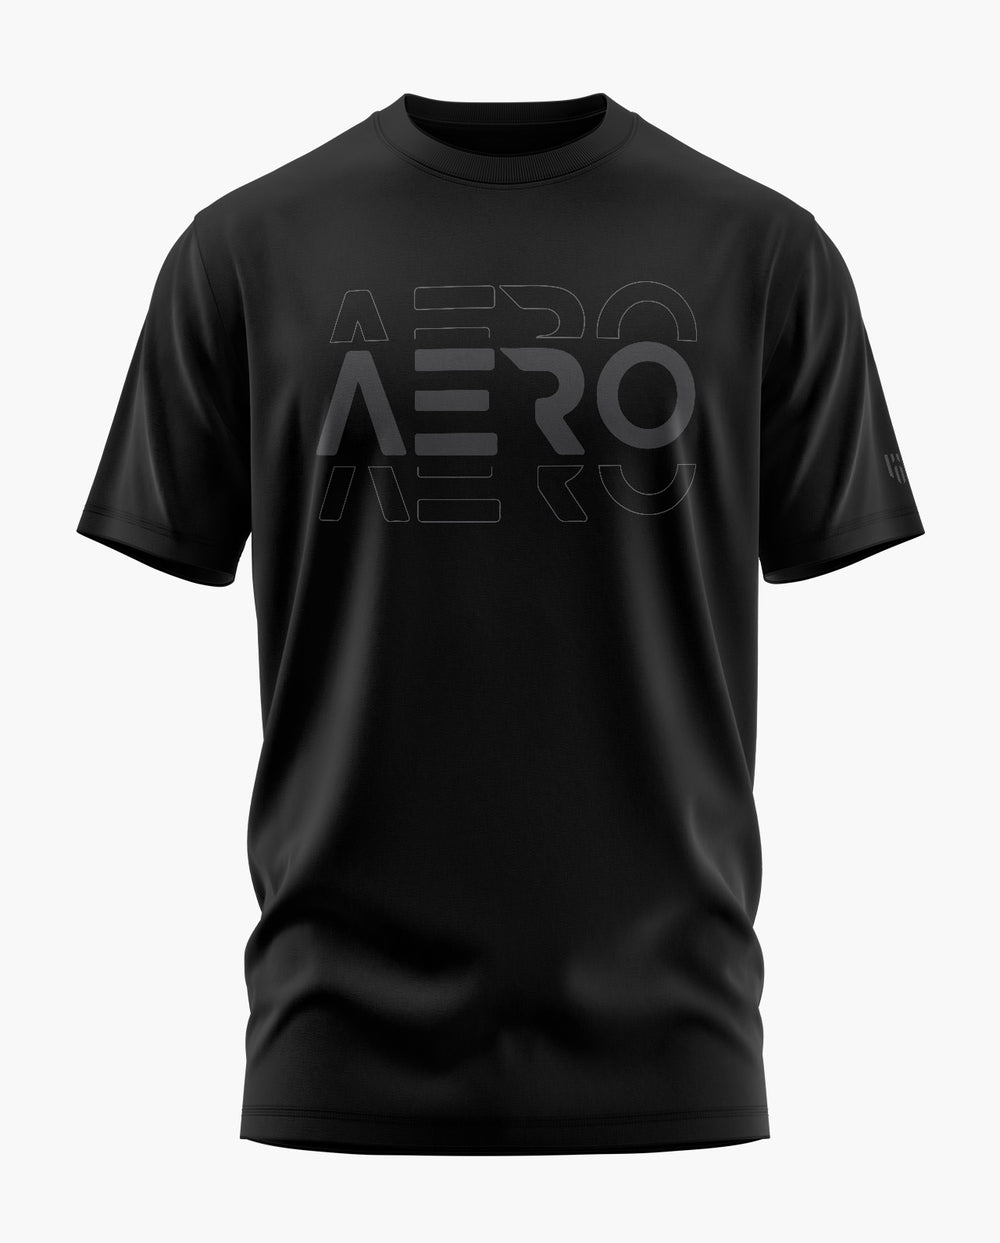 AERO SIGN T-Shirt - Aero Armour